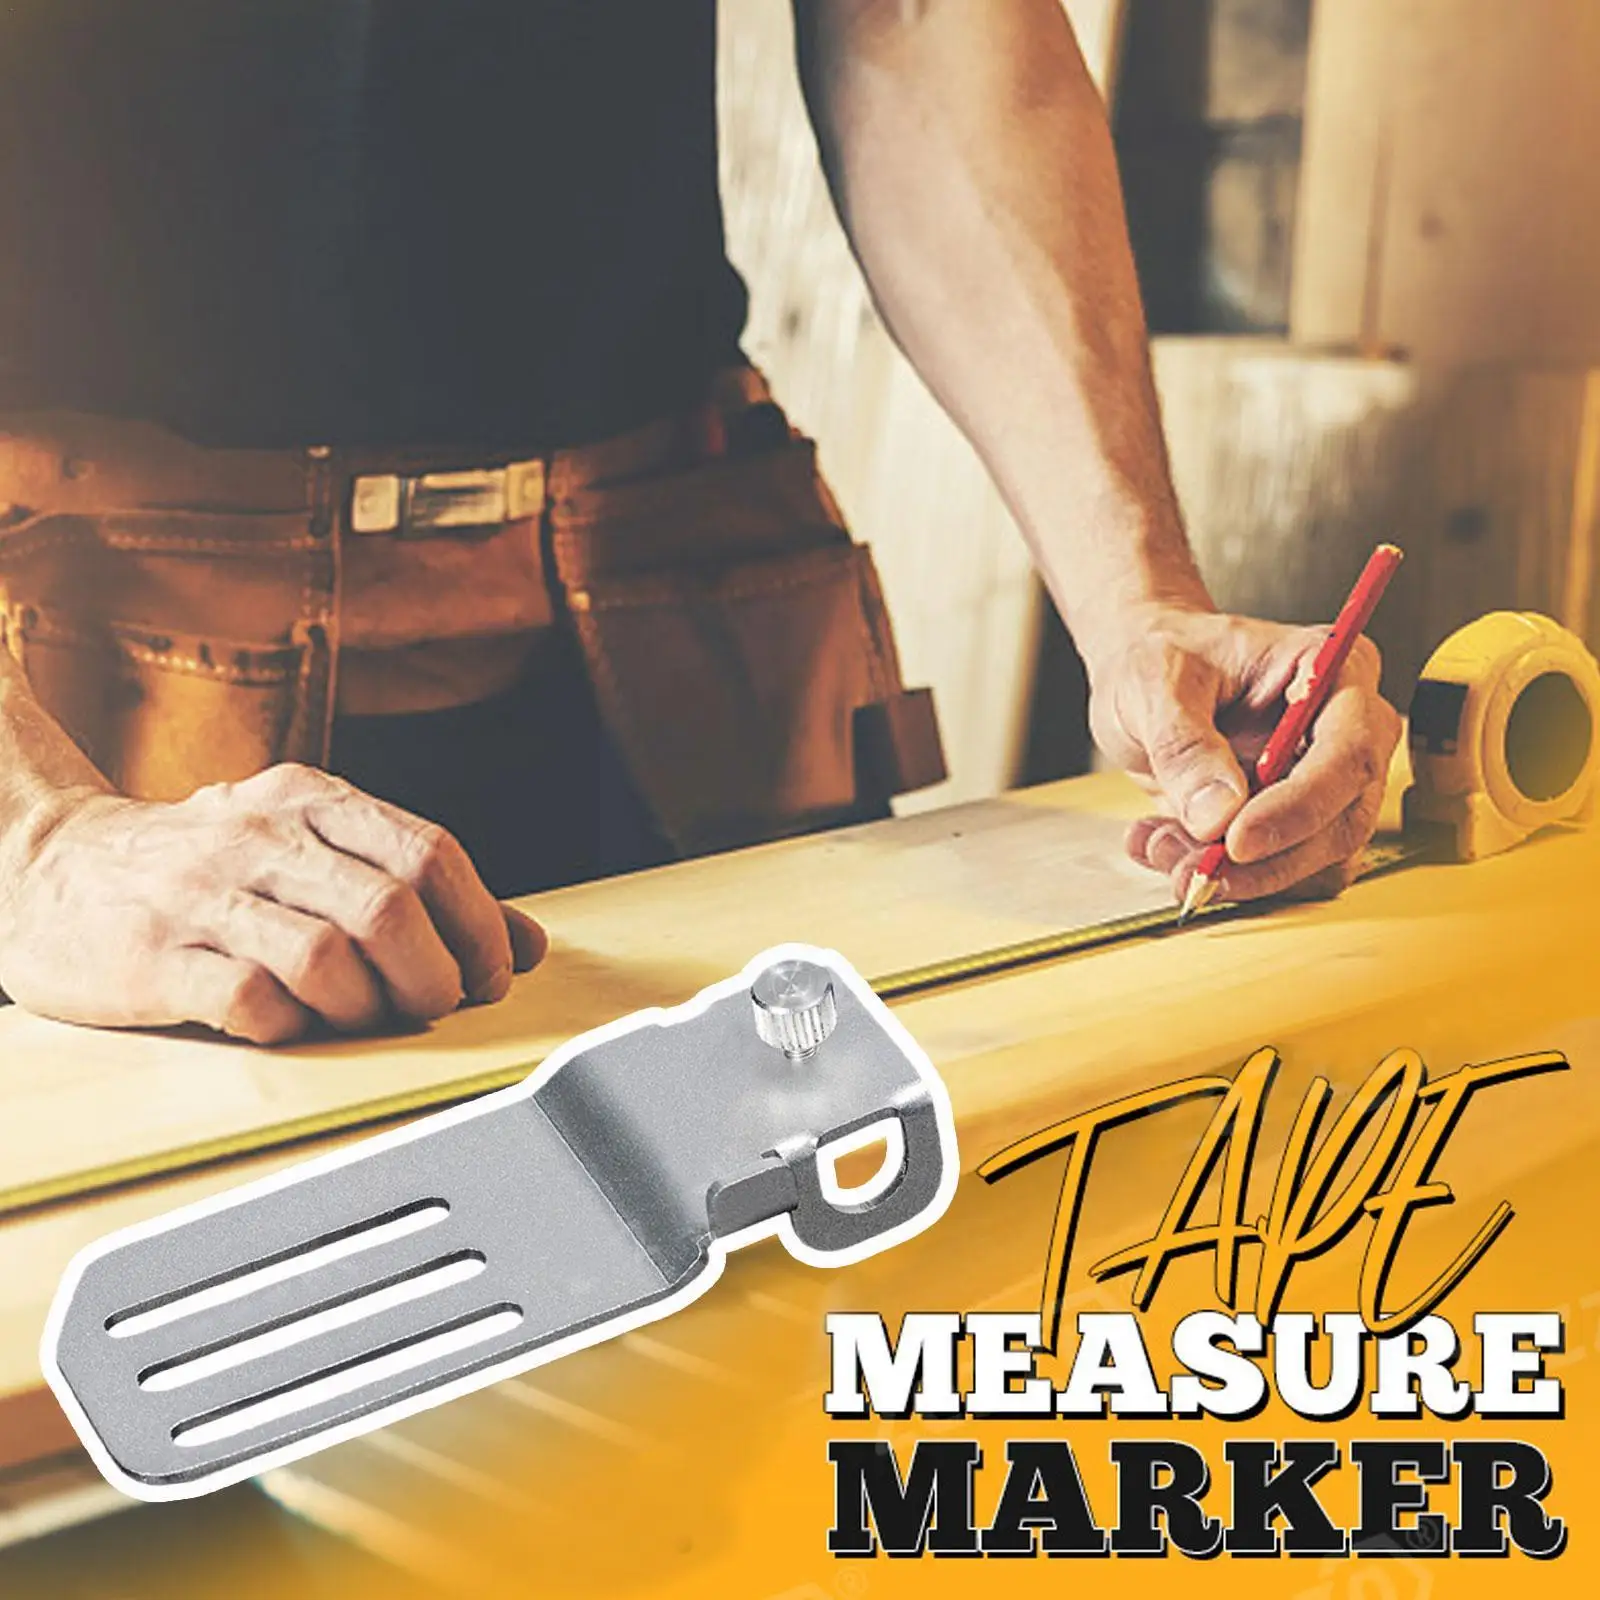 

Tape Measure Locator Measuring Tape Clip Measure Precision Tool For Edge Fringe Positioning Corner Clamp Flexible Ruler Mar W3Y0